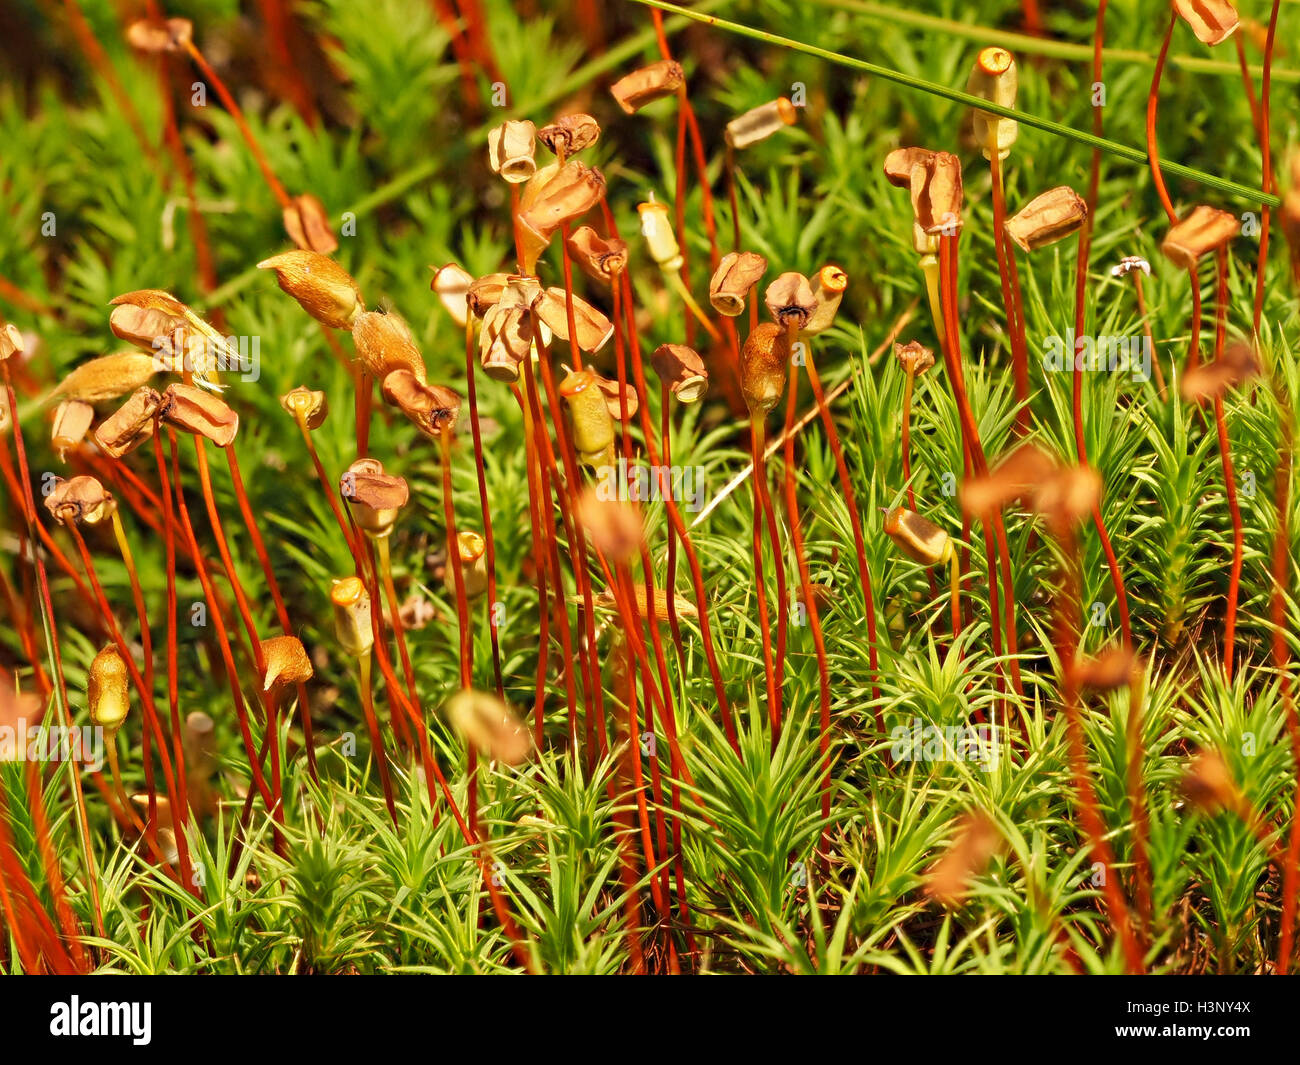 Common Haircap moss (Polytrichum commune) with mature seedpods on reddish stalks Stock Photo